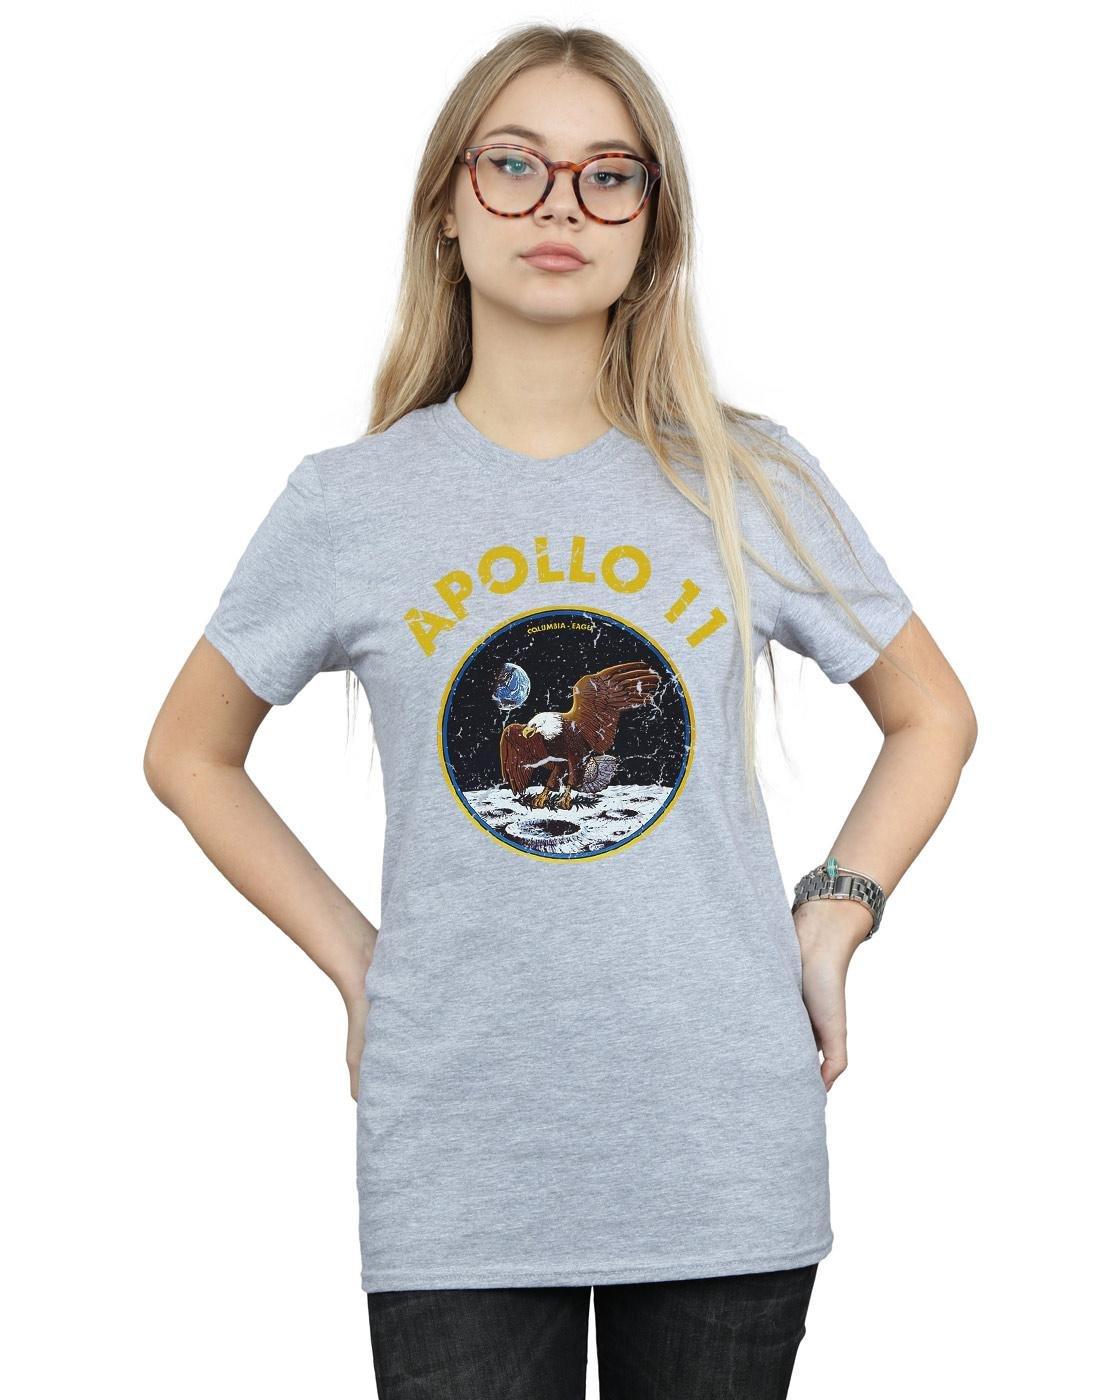 Nasa  Classic Apollo 11 TShirt 